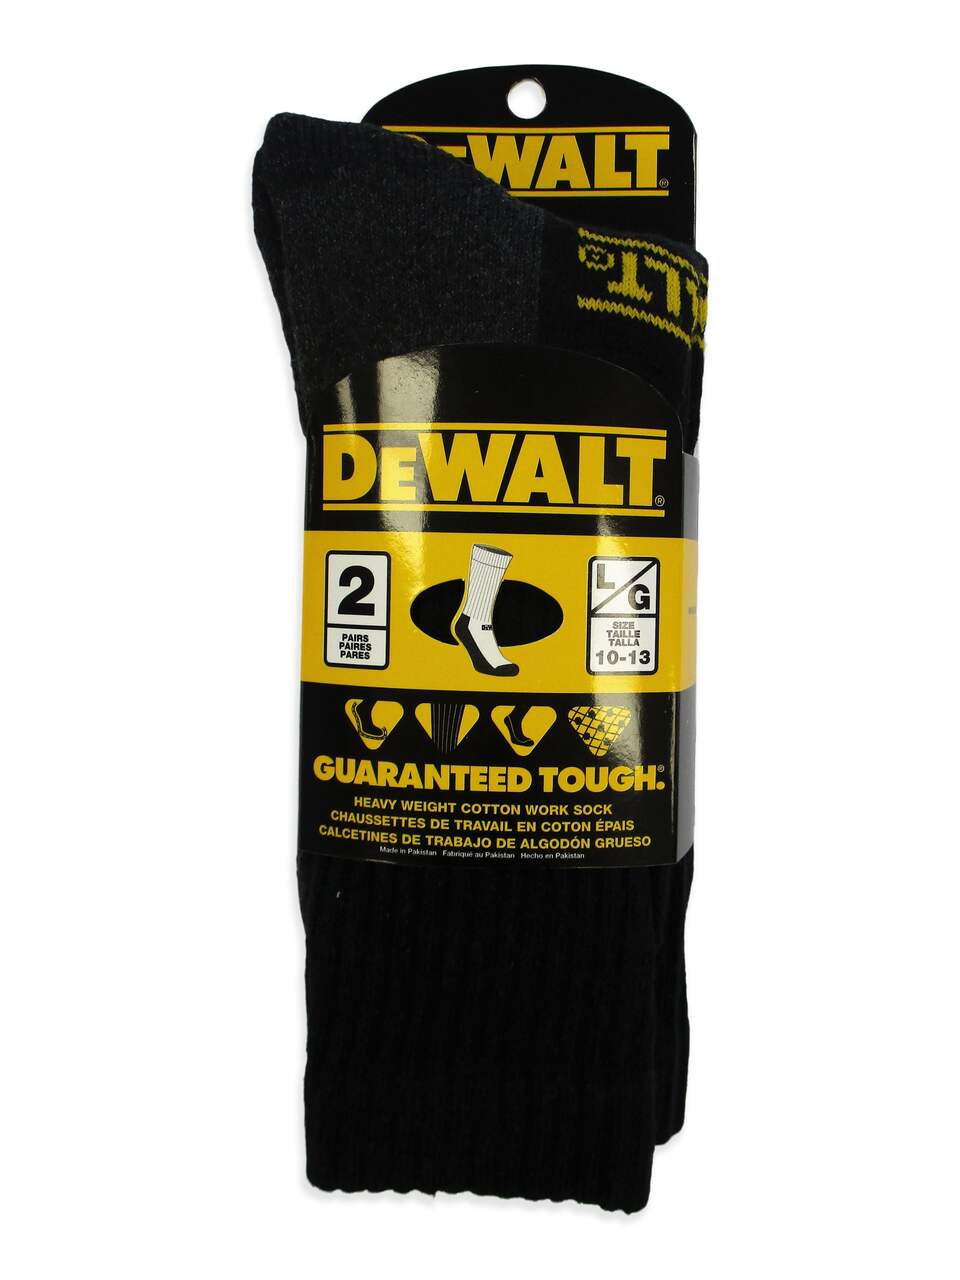 DEWALT Men's Heavy-Duty Cotton Work Socks, Fully Cushioned